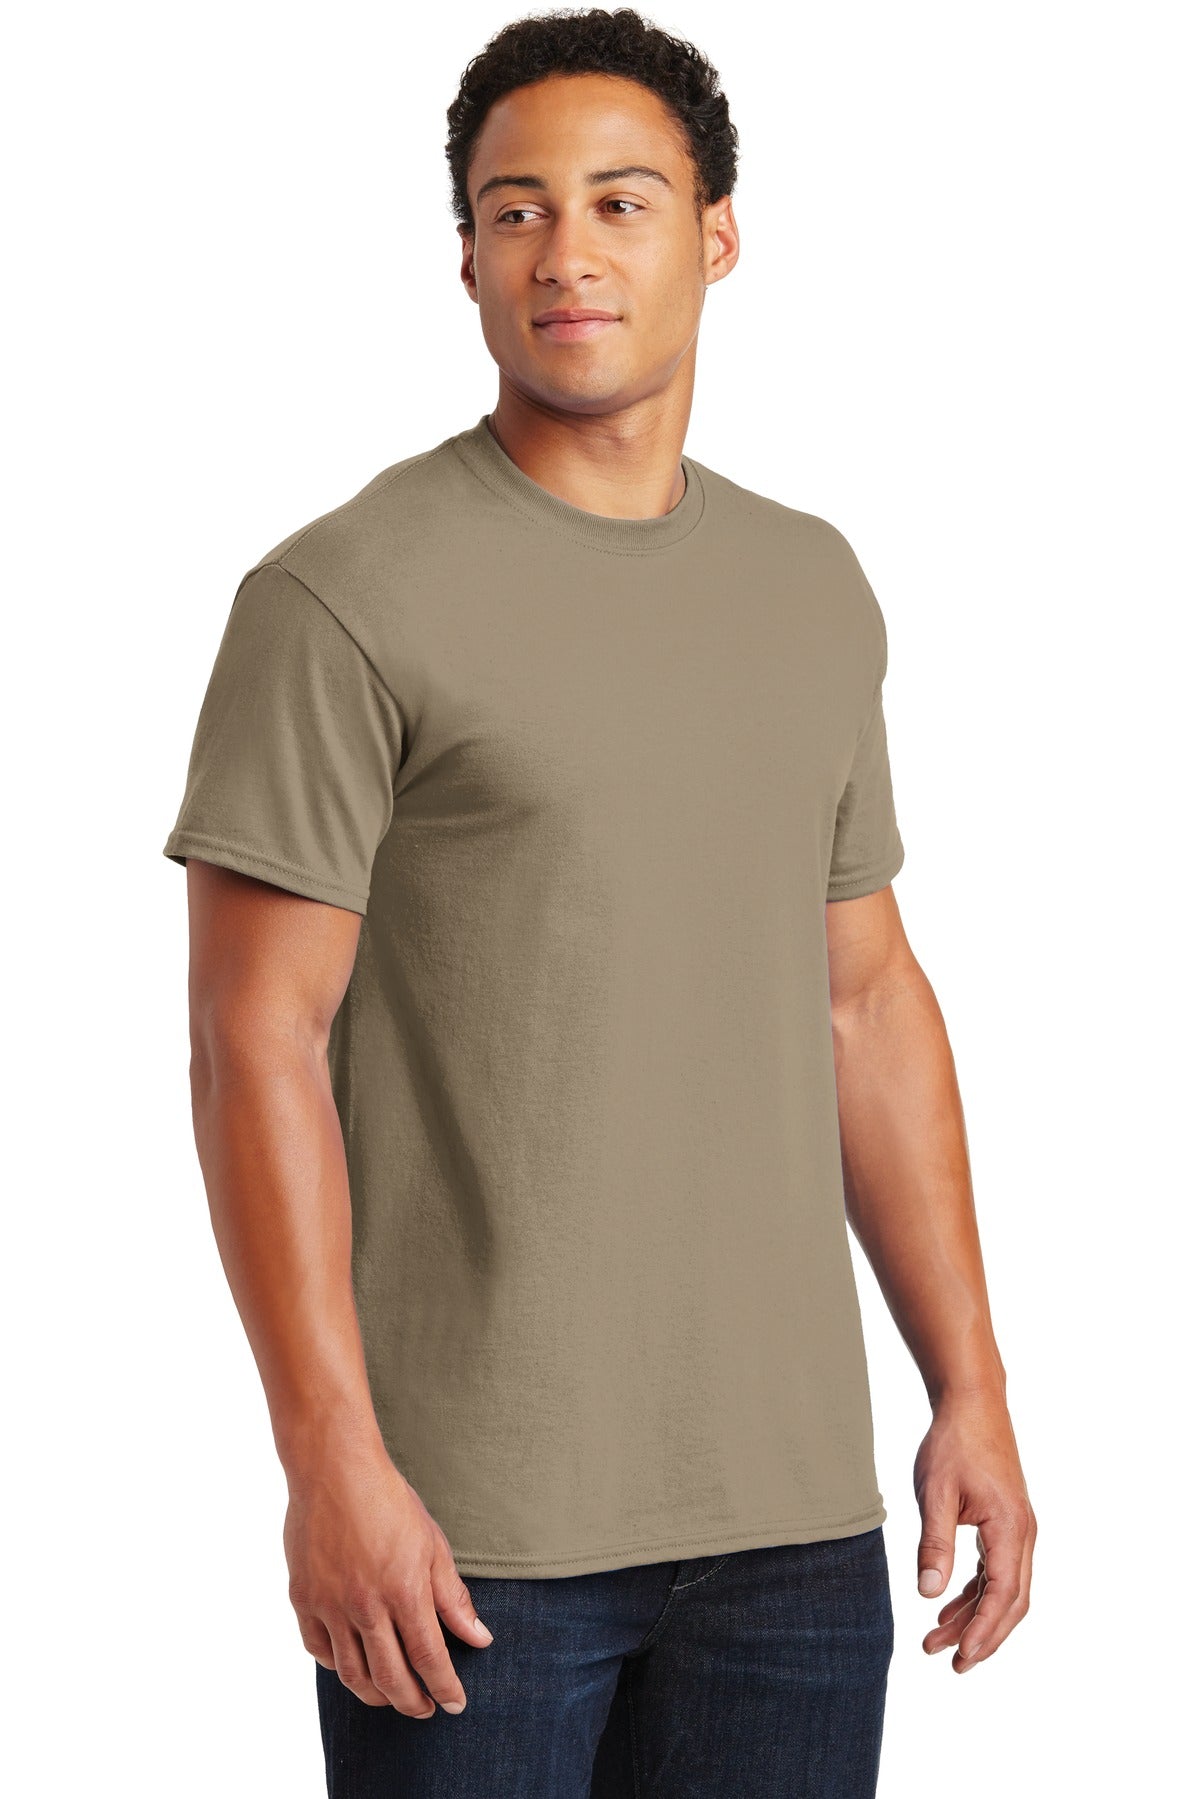 Gildan - Ultra Cotton 100% US Cotton T-Shirt. 2000 - Tan